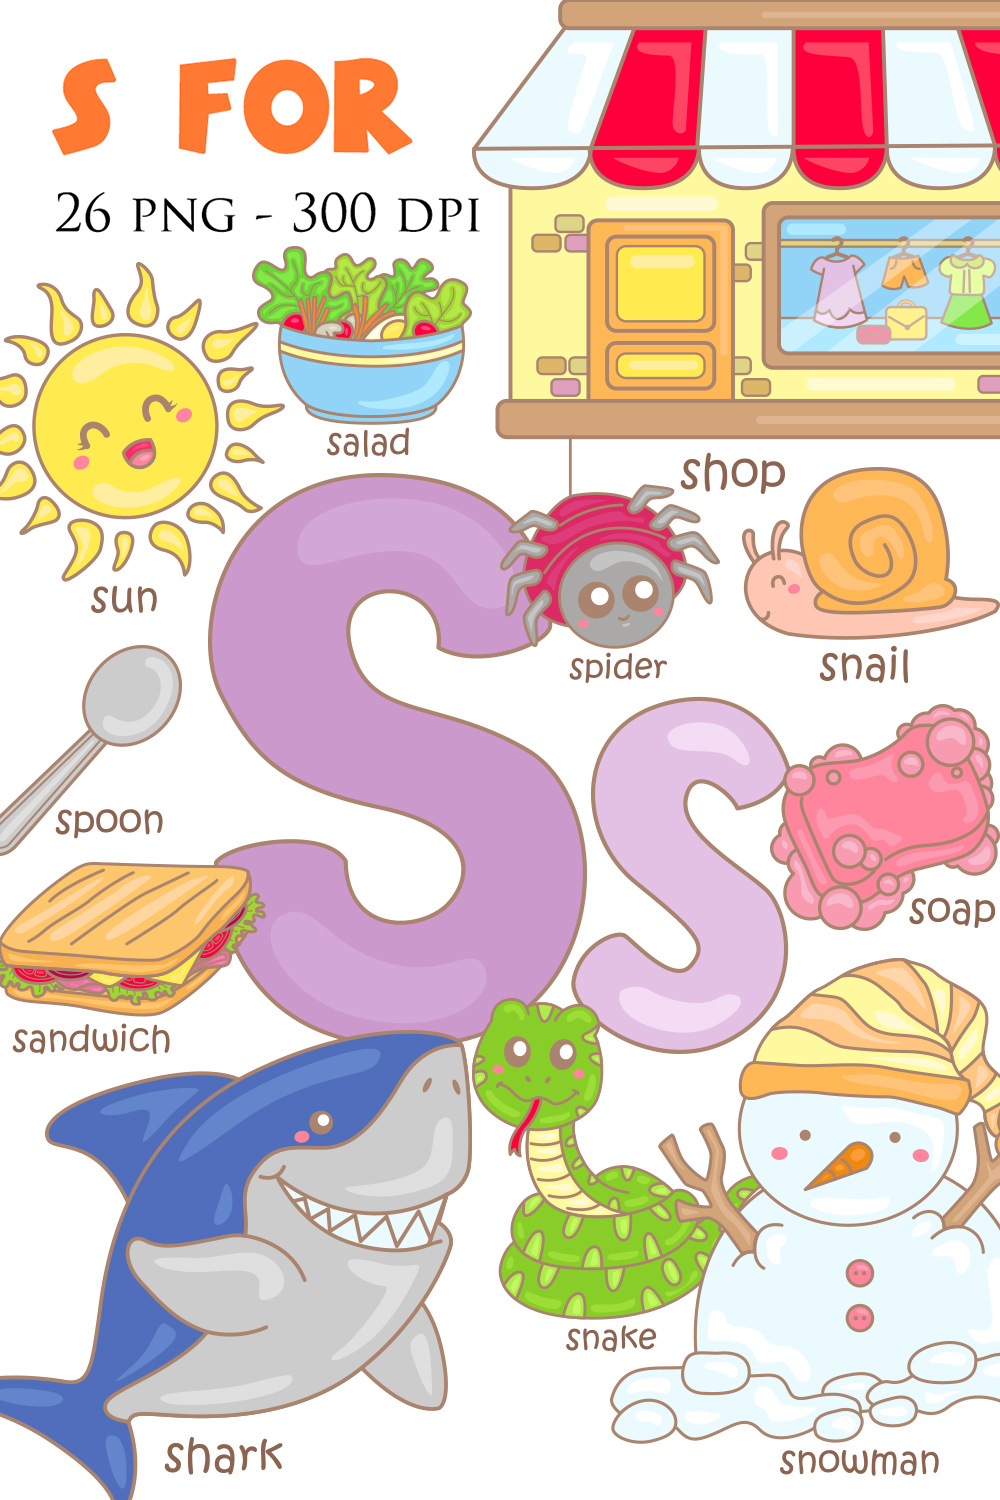 Alphabet S For Shark Sandwich Soap Snail Snake Salad Spoon Snowman Spider Shop Sheep Sun Vocabulary School Lesson Illustration Vector Clipart Cartoon pinterest preview image.